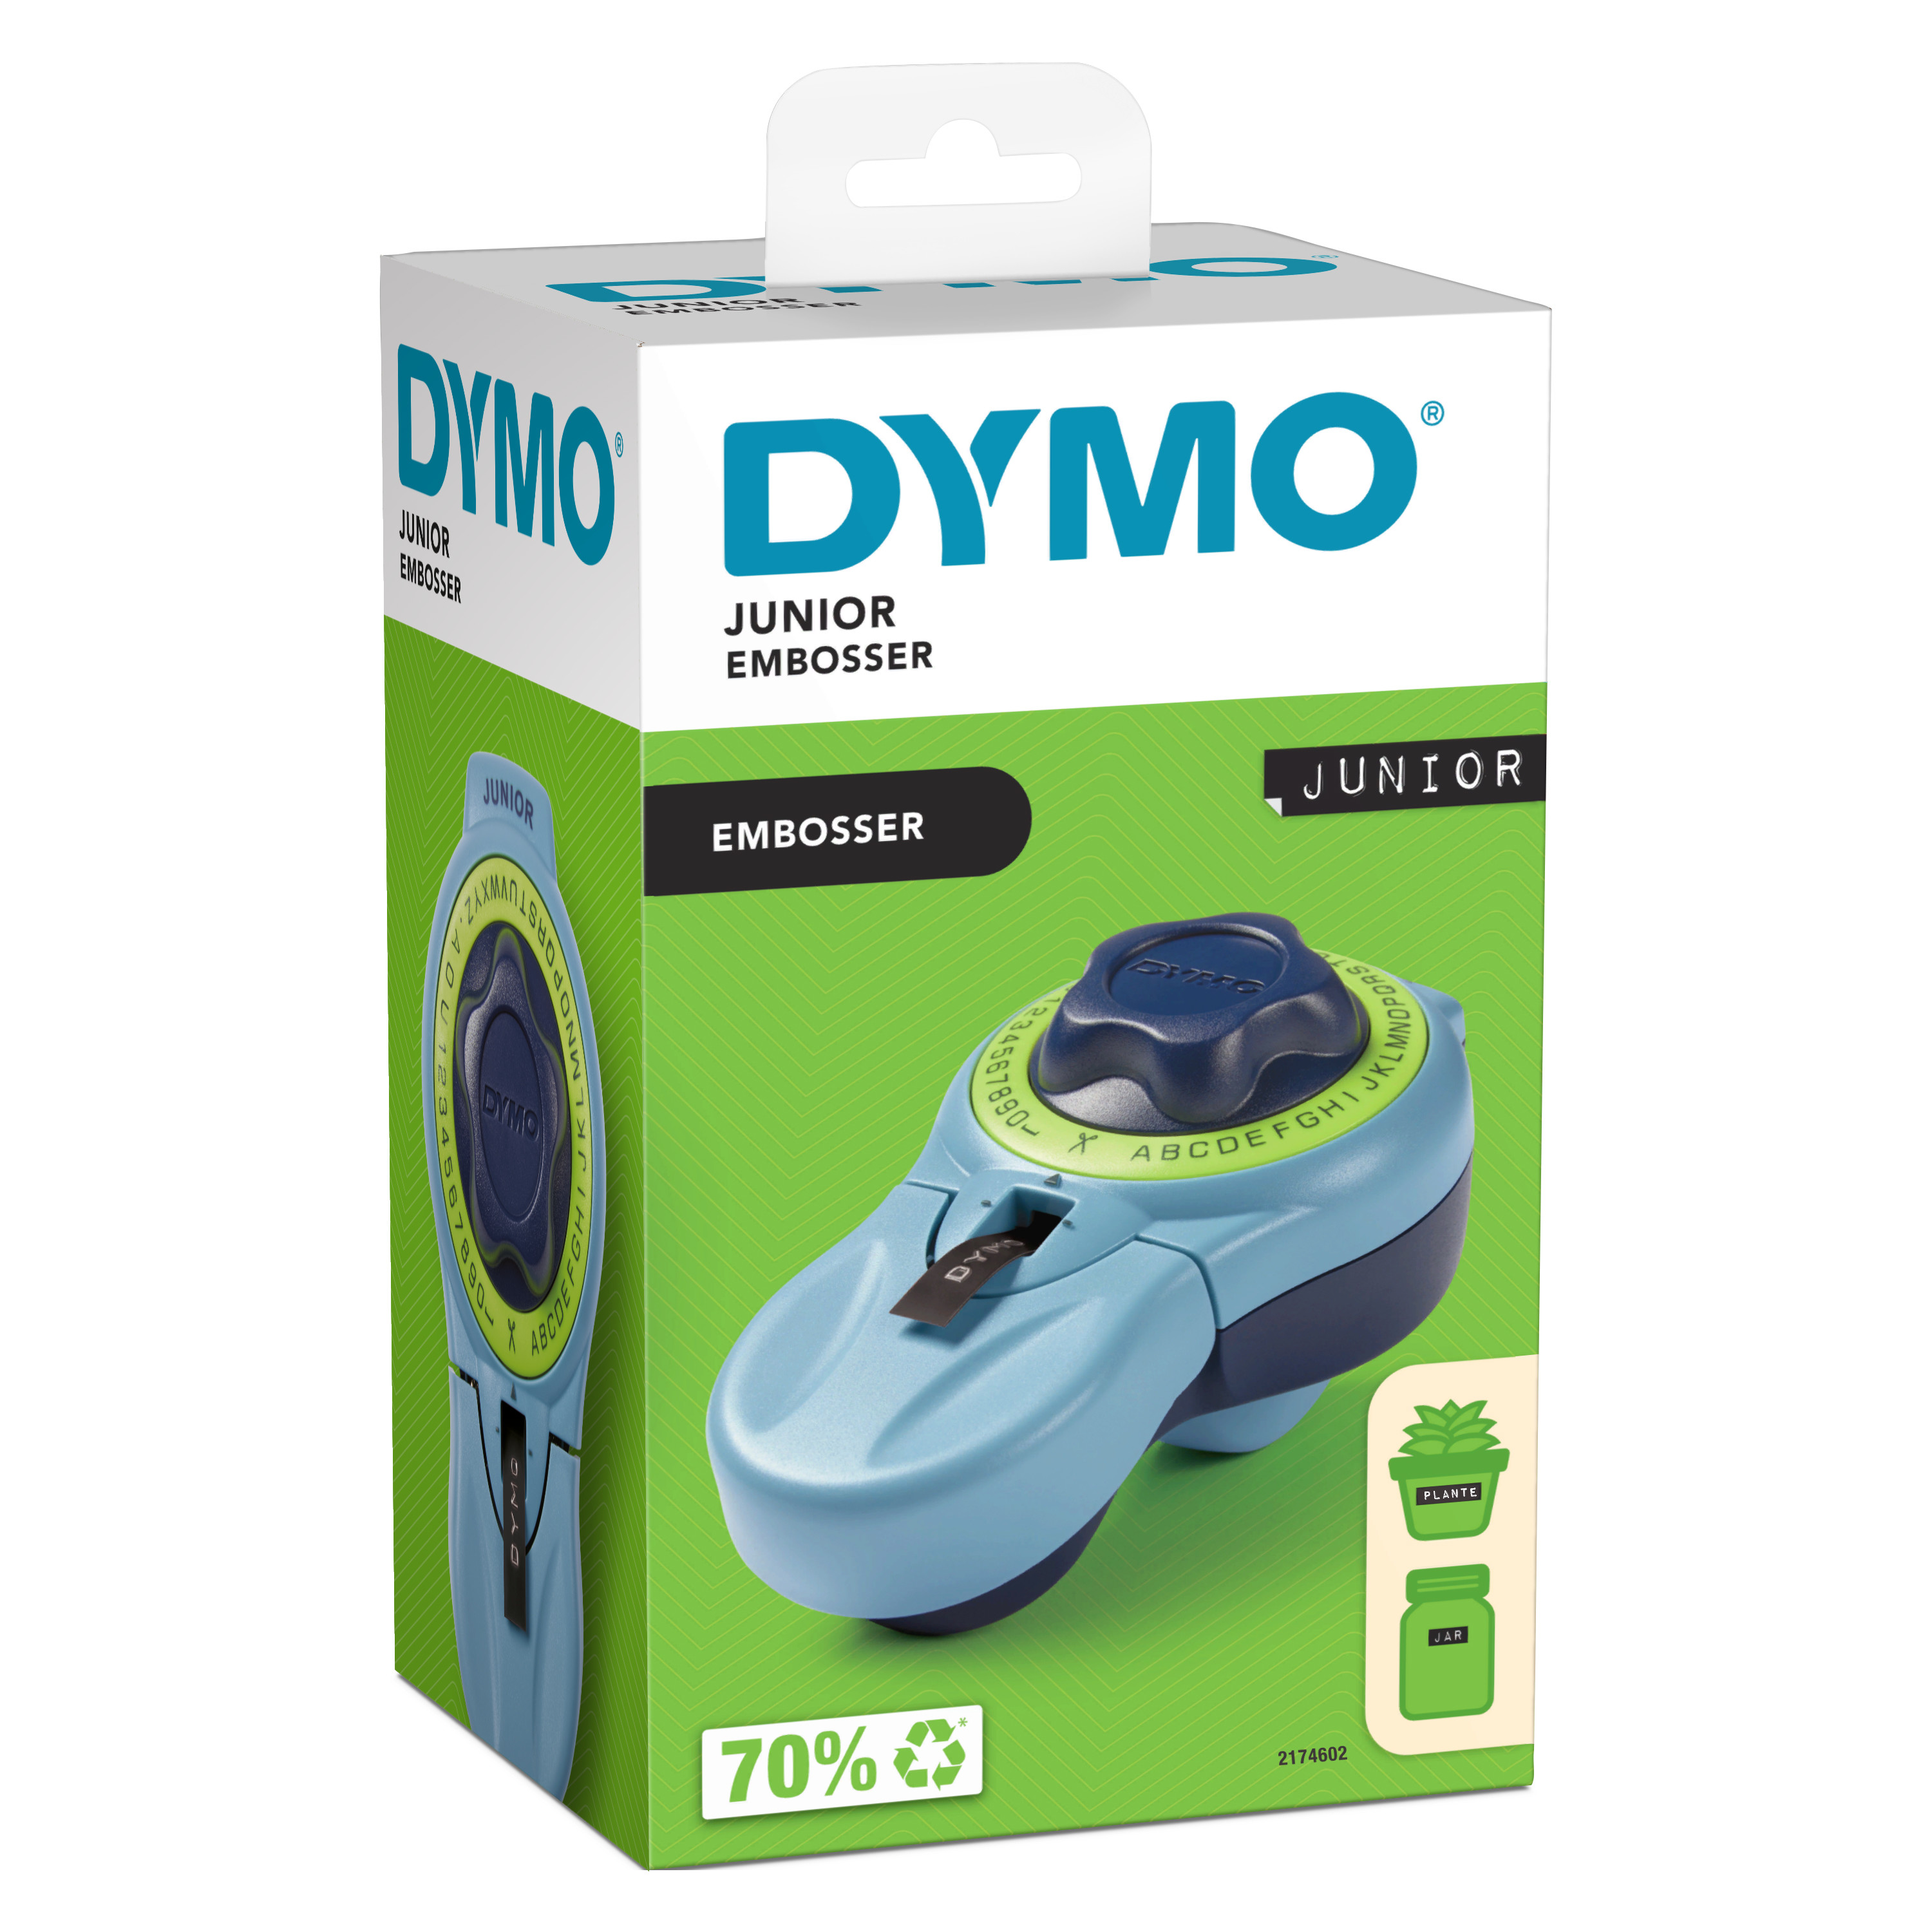 DYMO Junior Prägegerät - Etikettiergerät für Zuhause Blister - 2174602